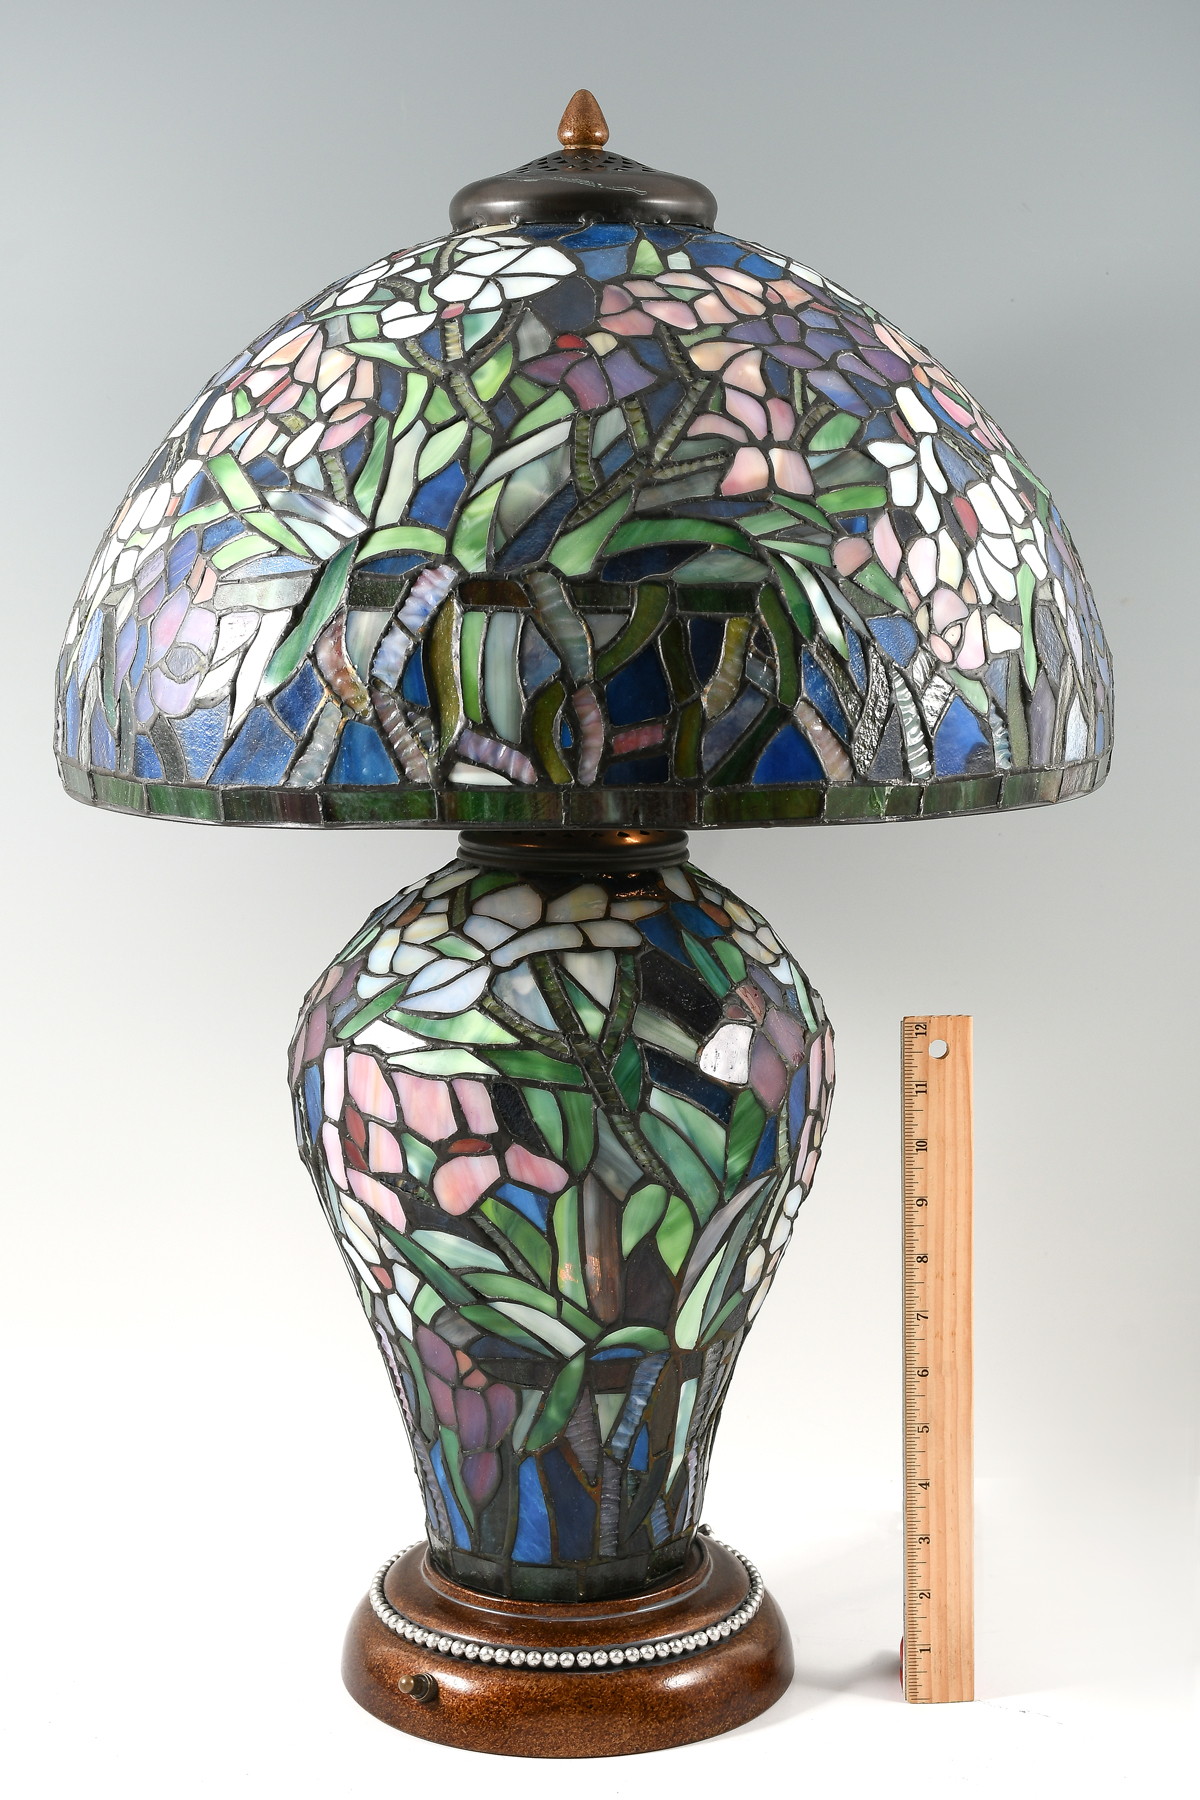 TIFFANY STYLE LEADED GLASS LAMP: